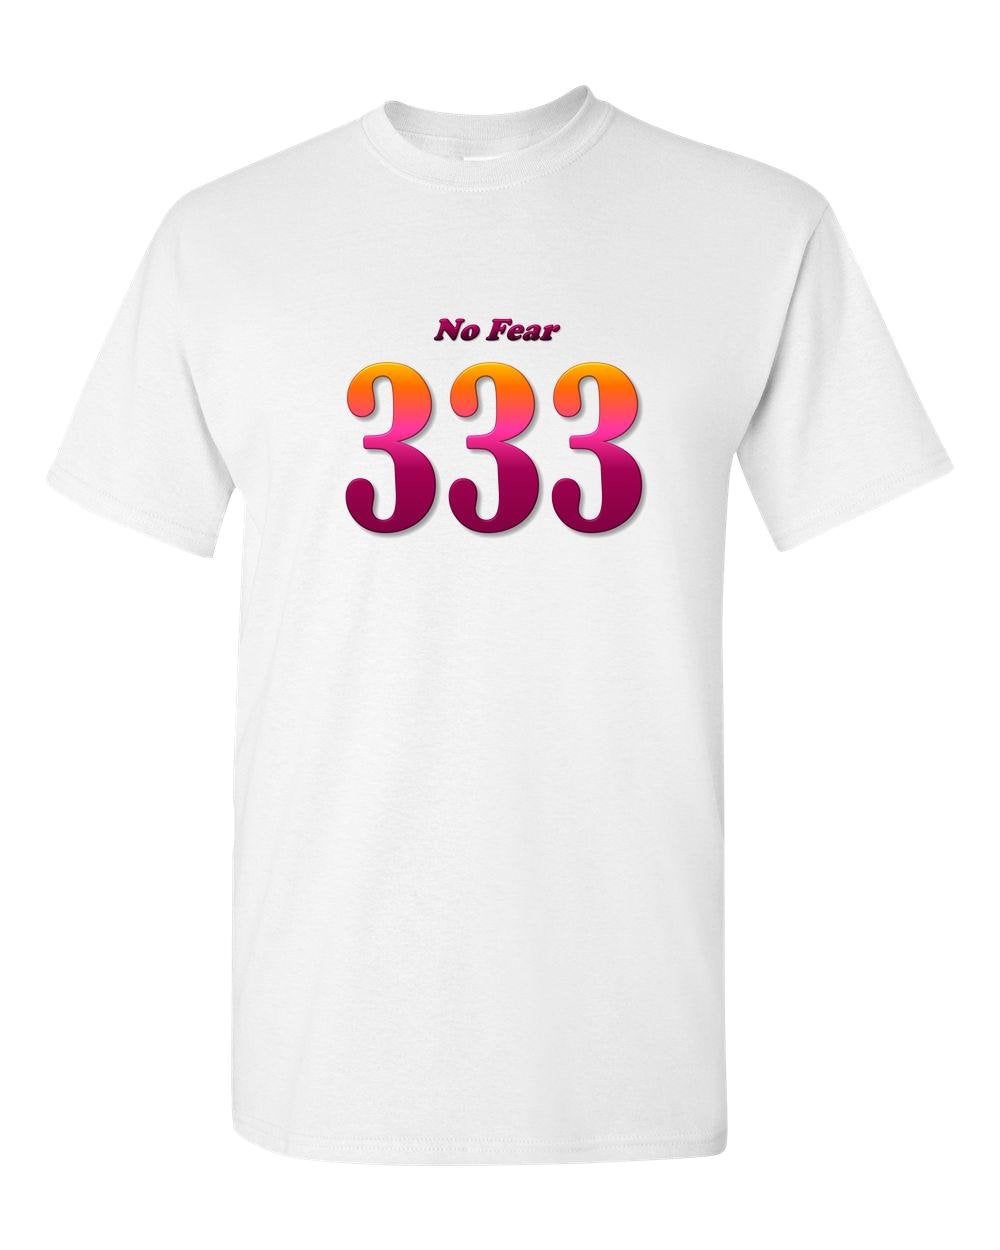 Angel  No Fear 333 - Adult Unisex T-Shirt